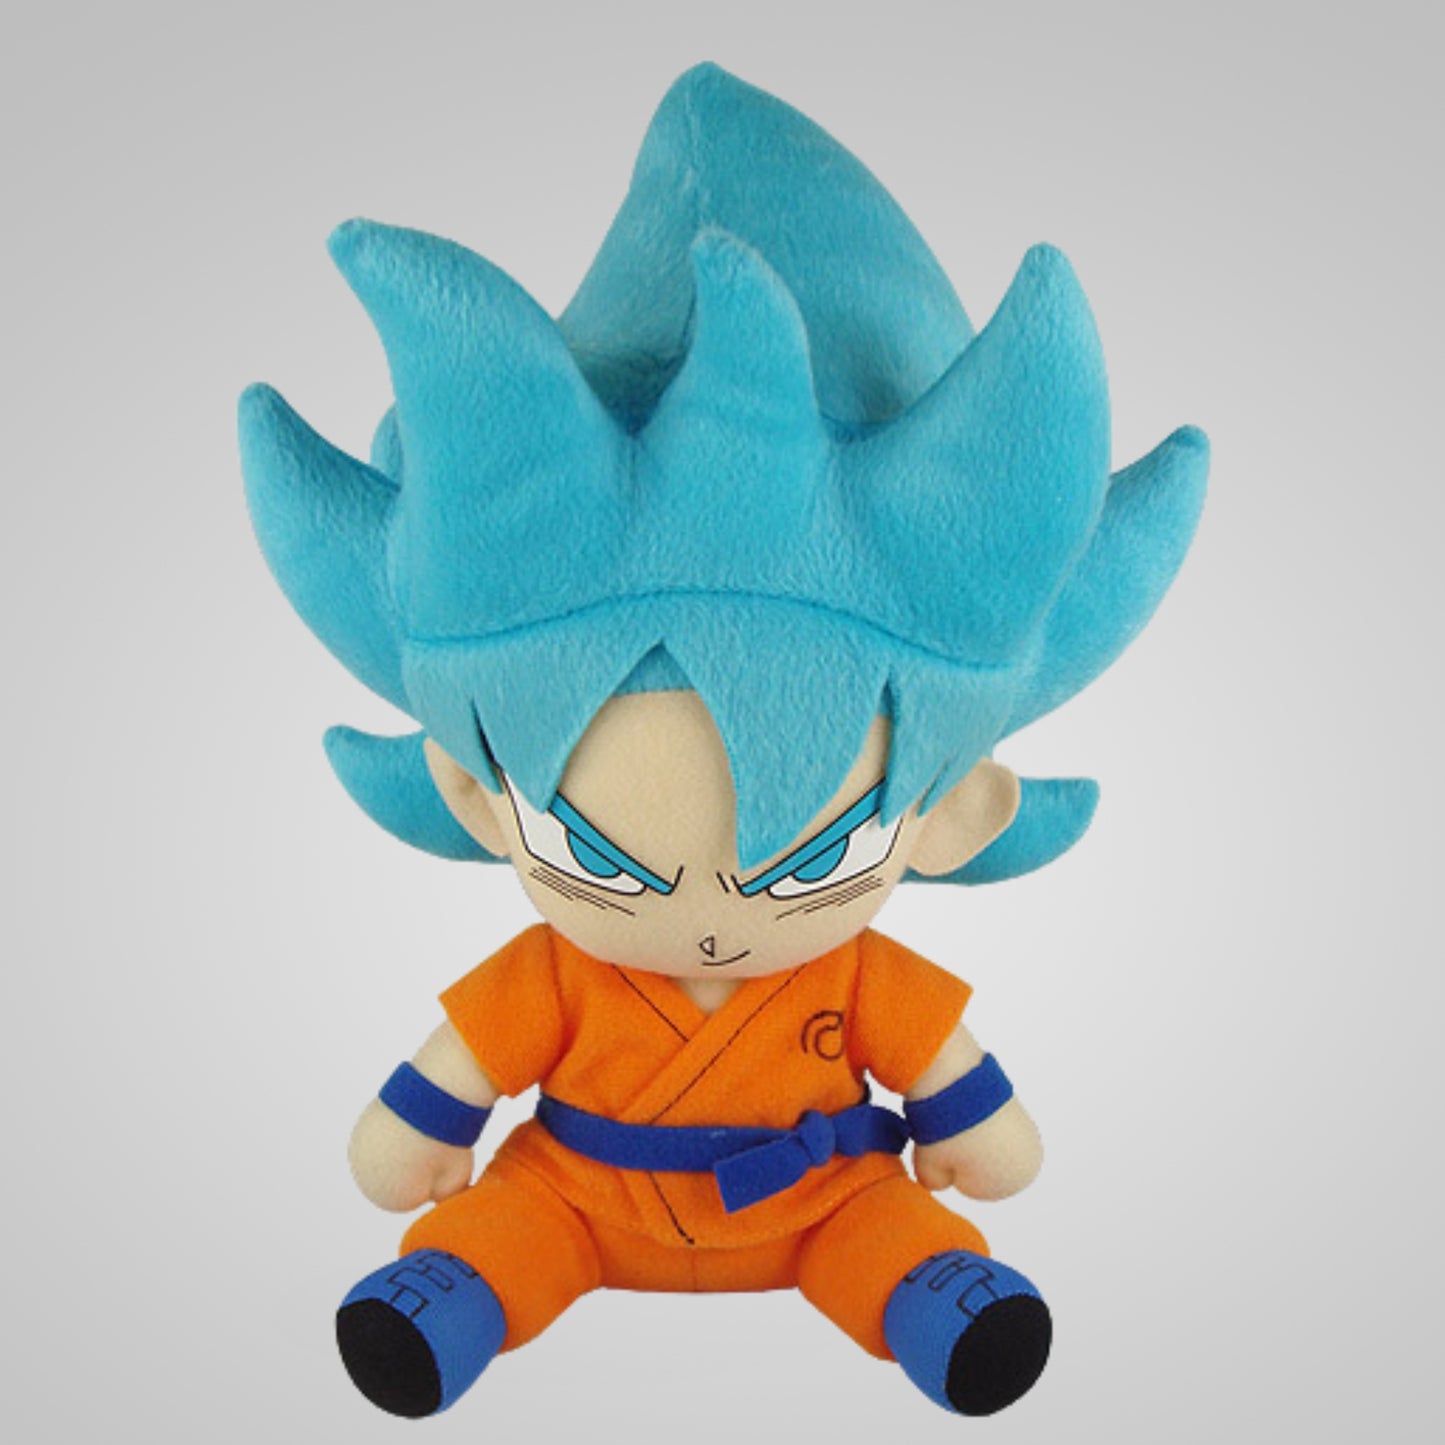 Dragon Ball Super Attack Collection Super Saiyan Blue Goku Action Figure  (7)